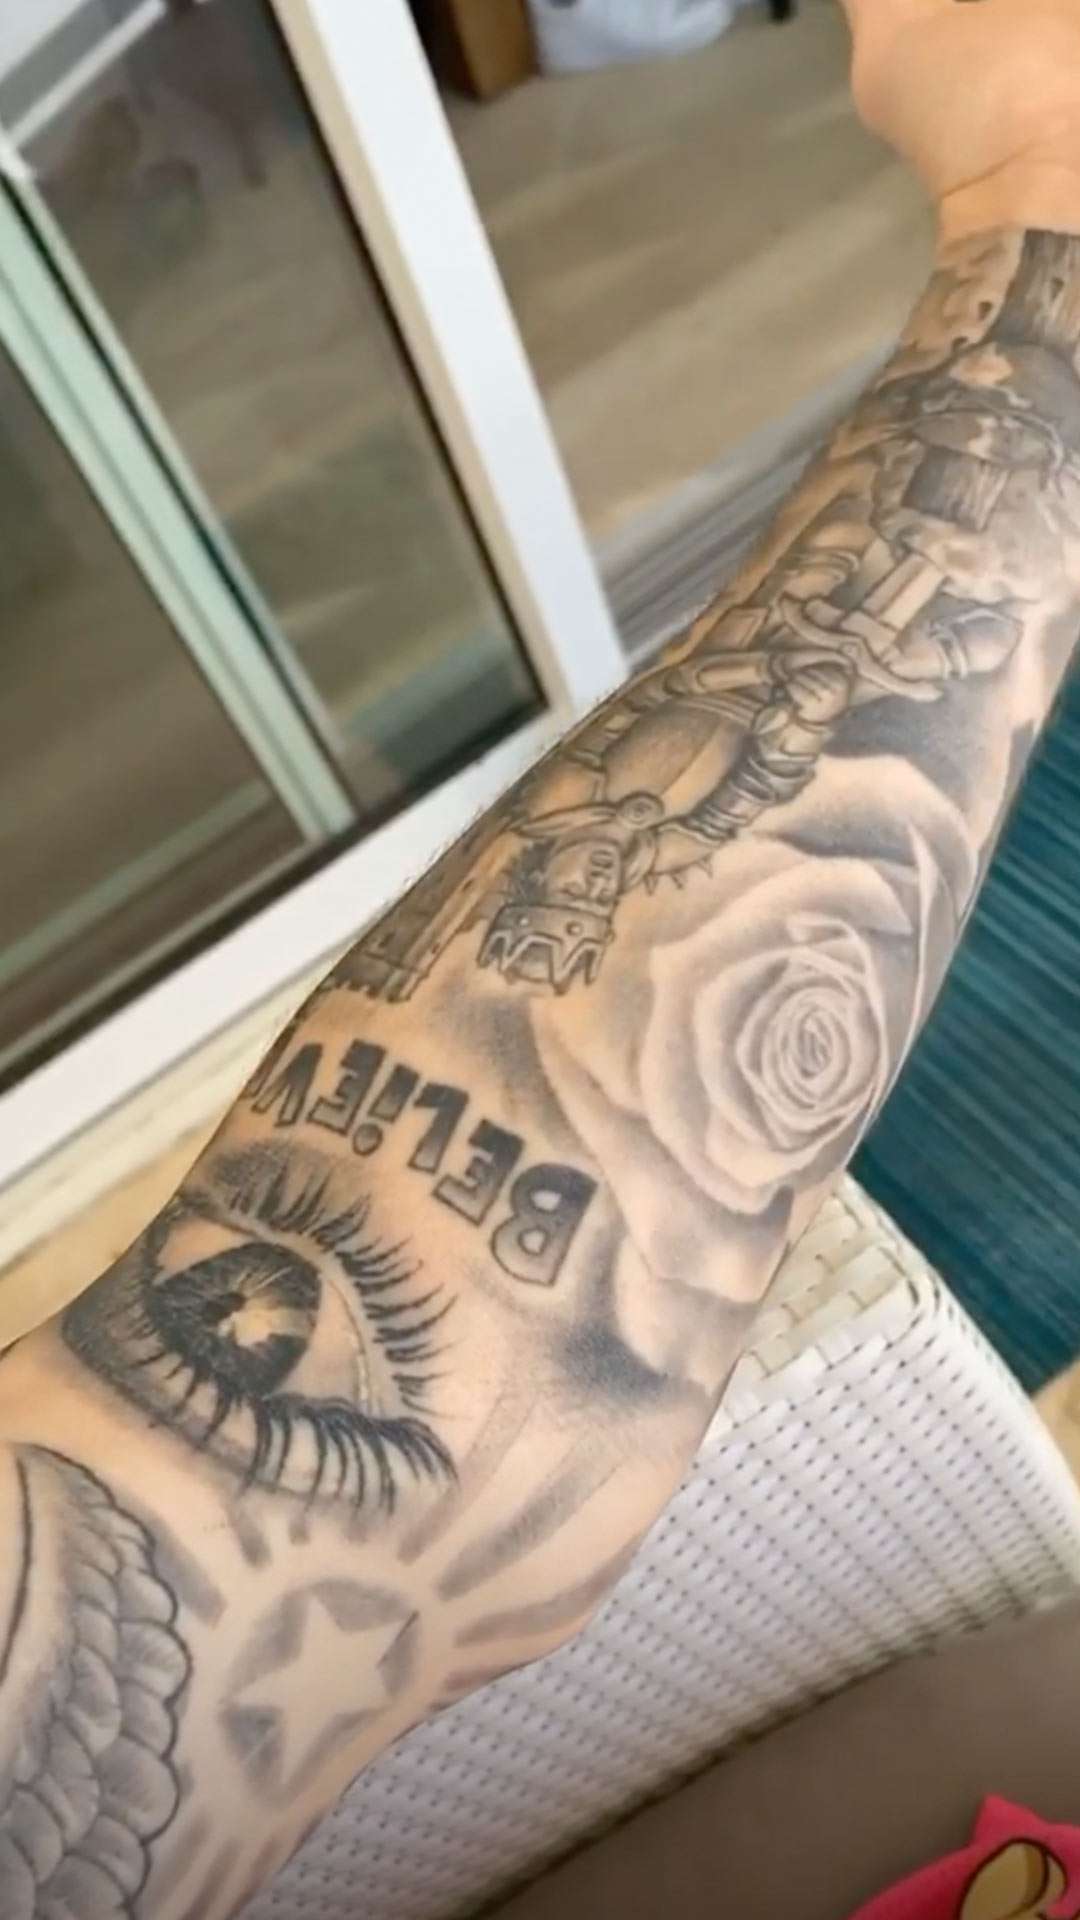 Justin Bieber body tattoos